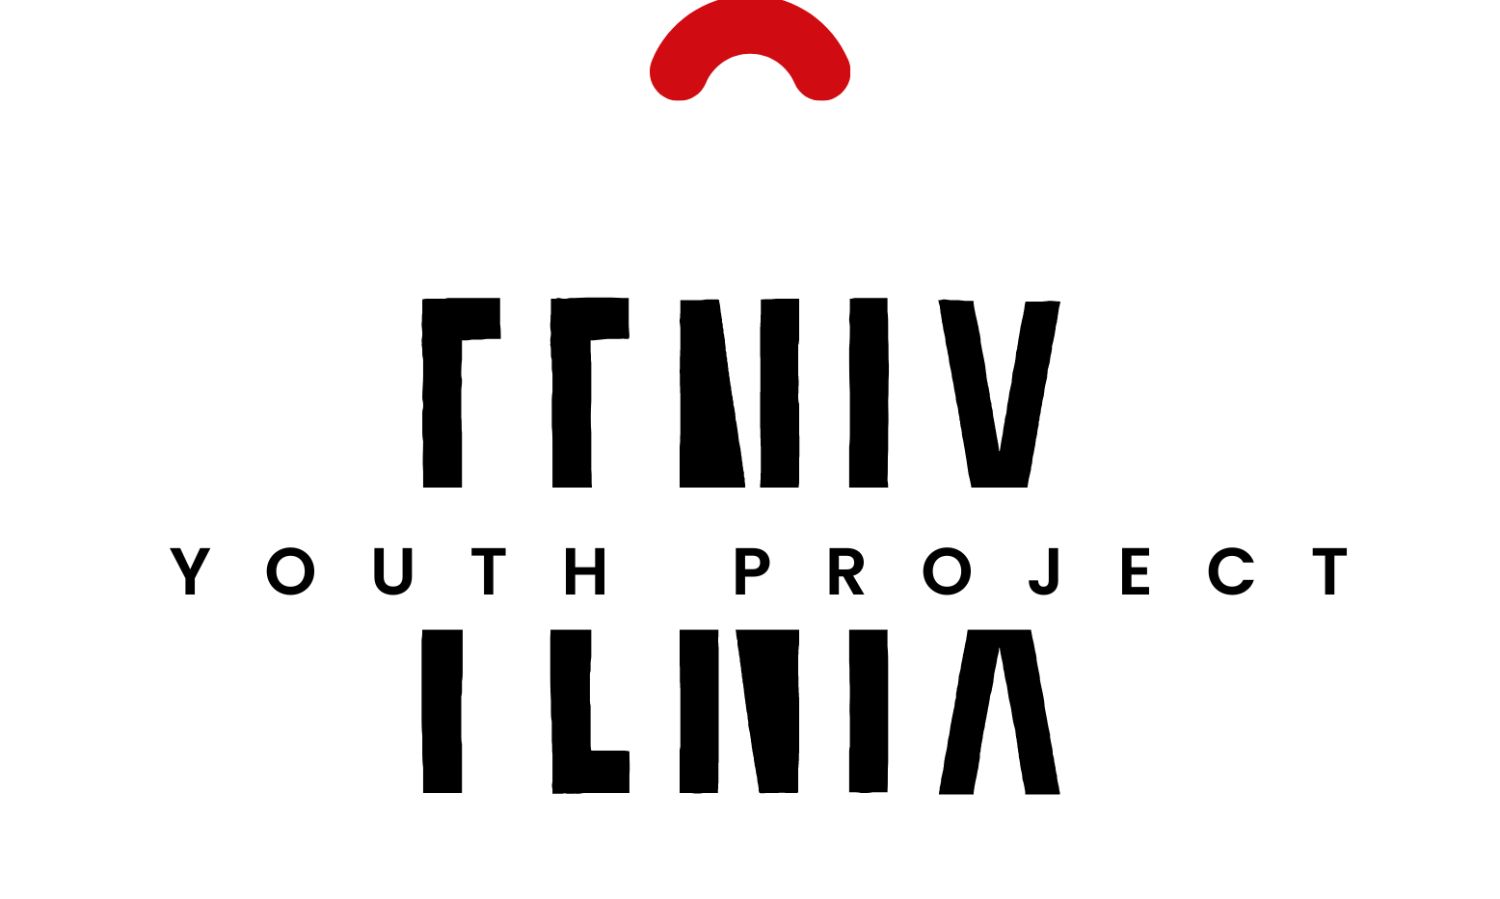 Fenix Youth Project